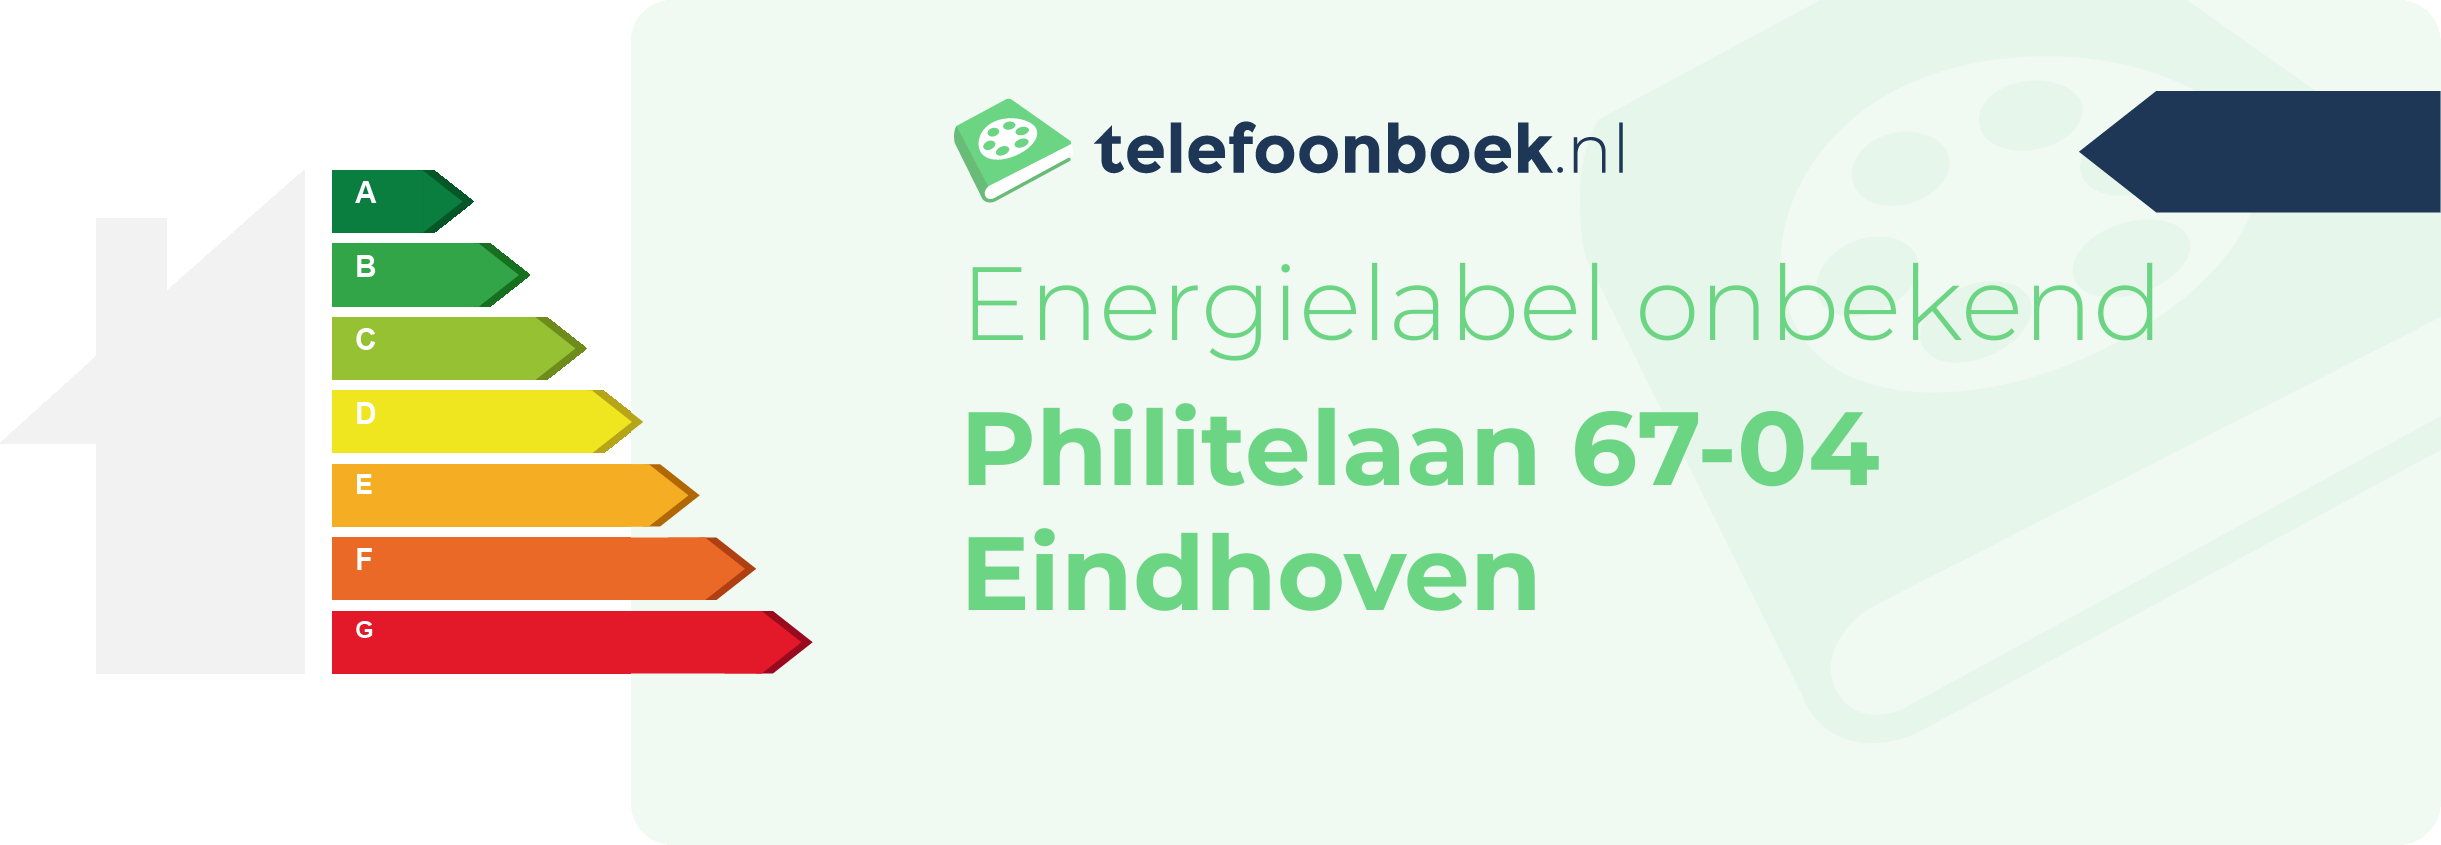 Energielabel Philitelaan 67-04 Eindhoven